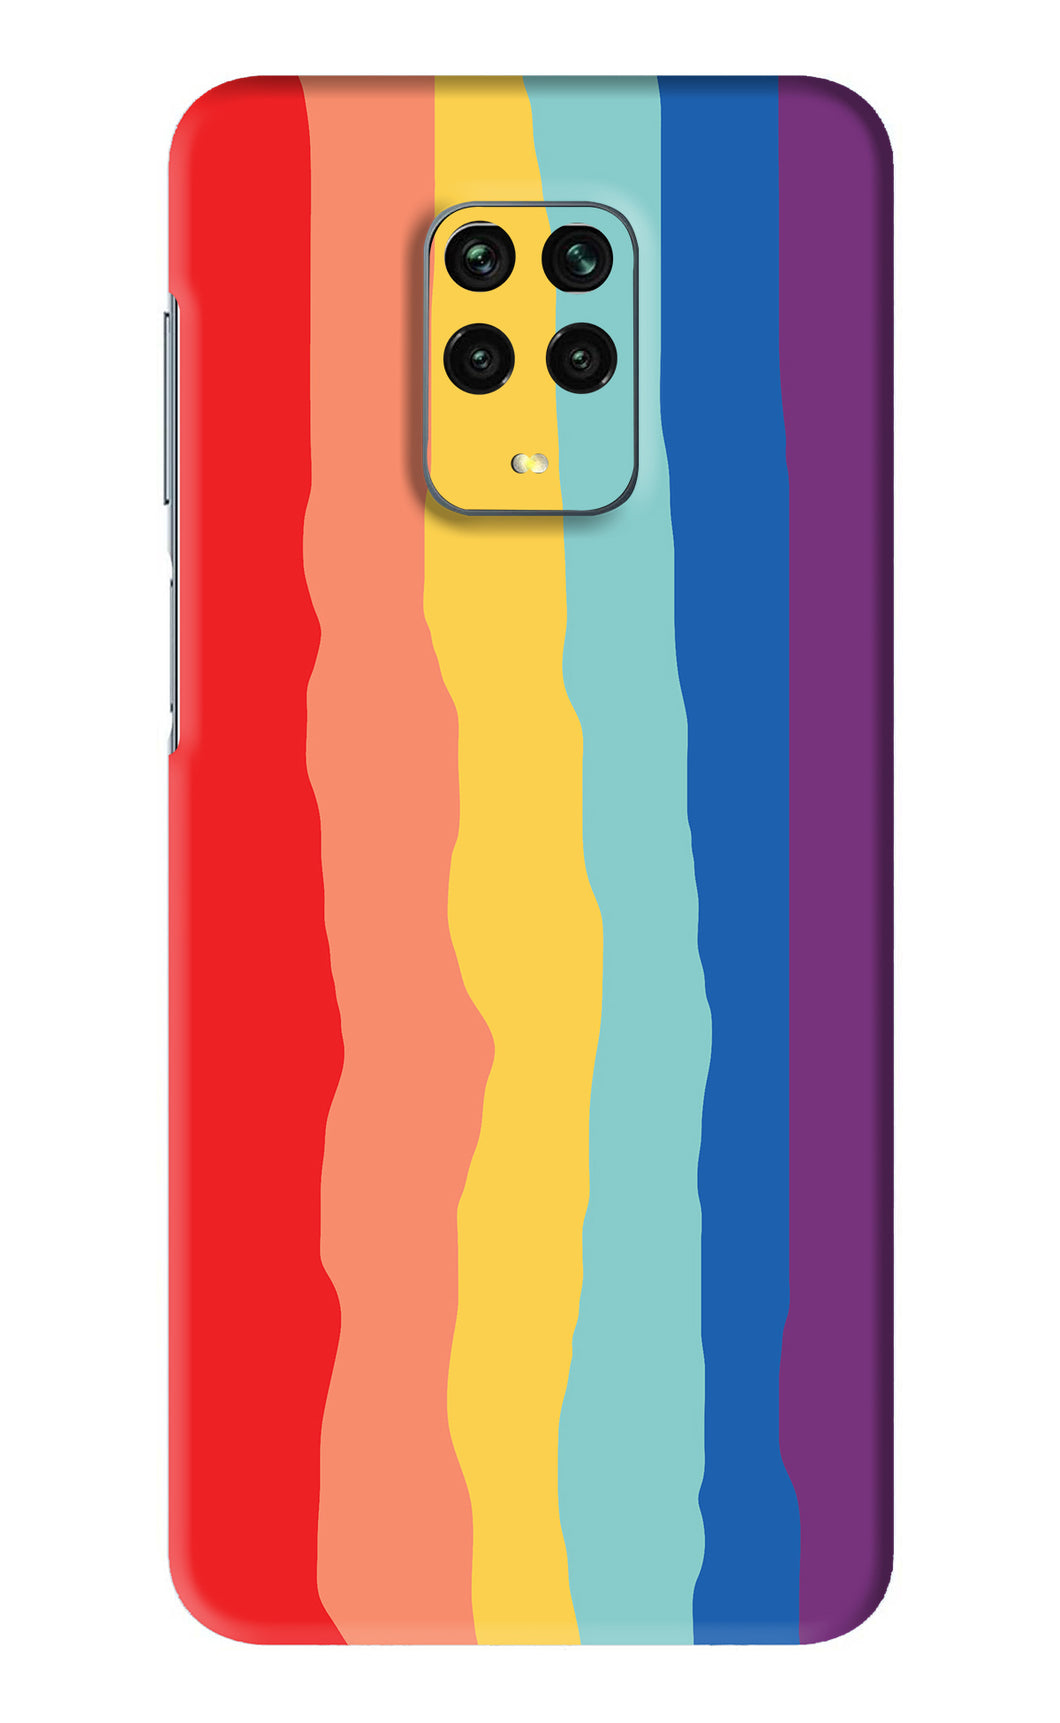 Rainbow Xiaomi Redmi Note 9 Pro Max Back Skin Wrap